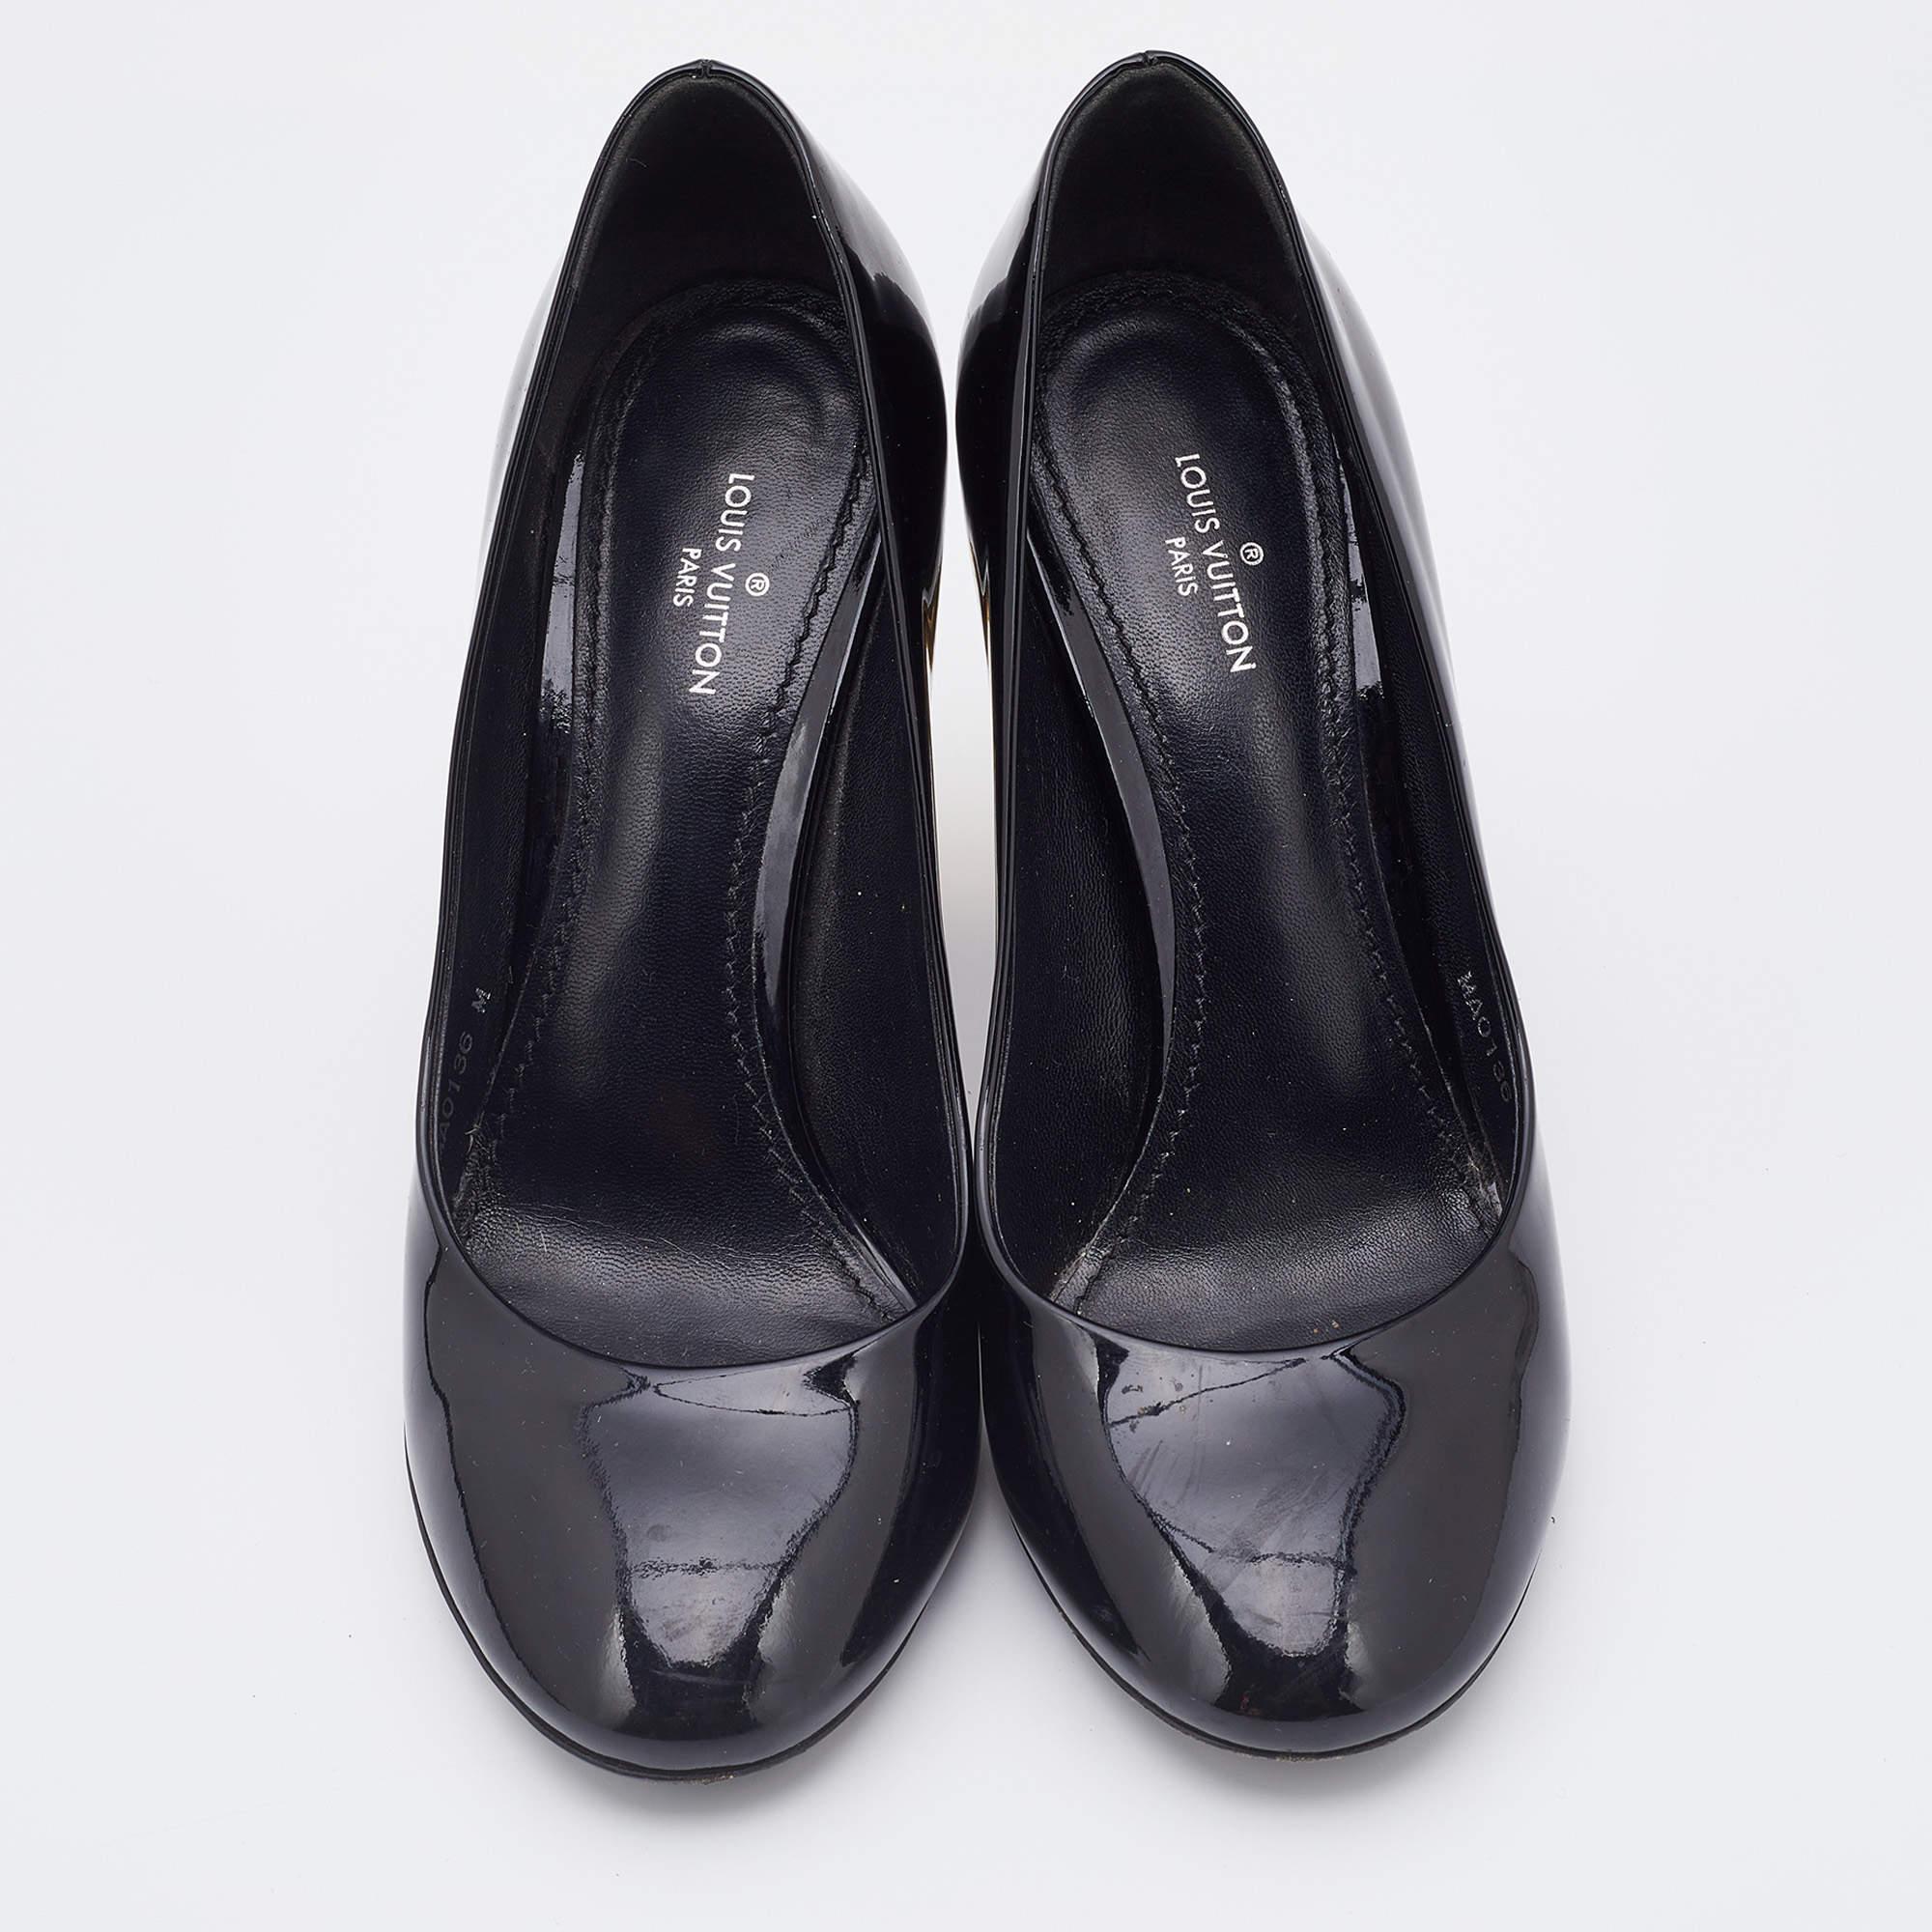 Louis Vuitton Black Patent Leather Round Toe Block Heel Pumps Size 36 In Good Condition For Sale In Dubai, Al Qouz 2